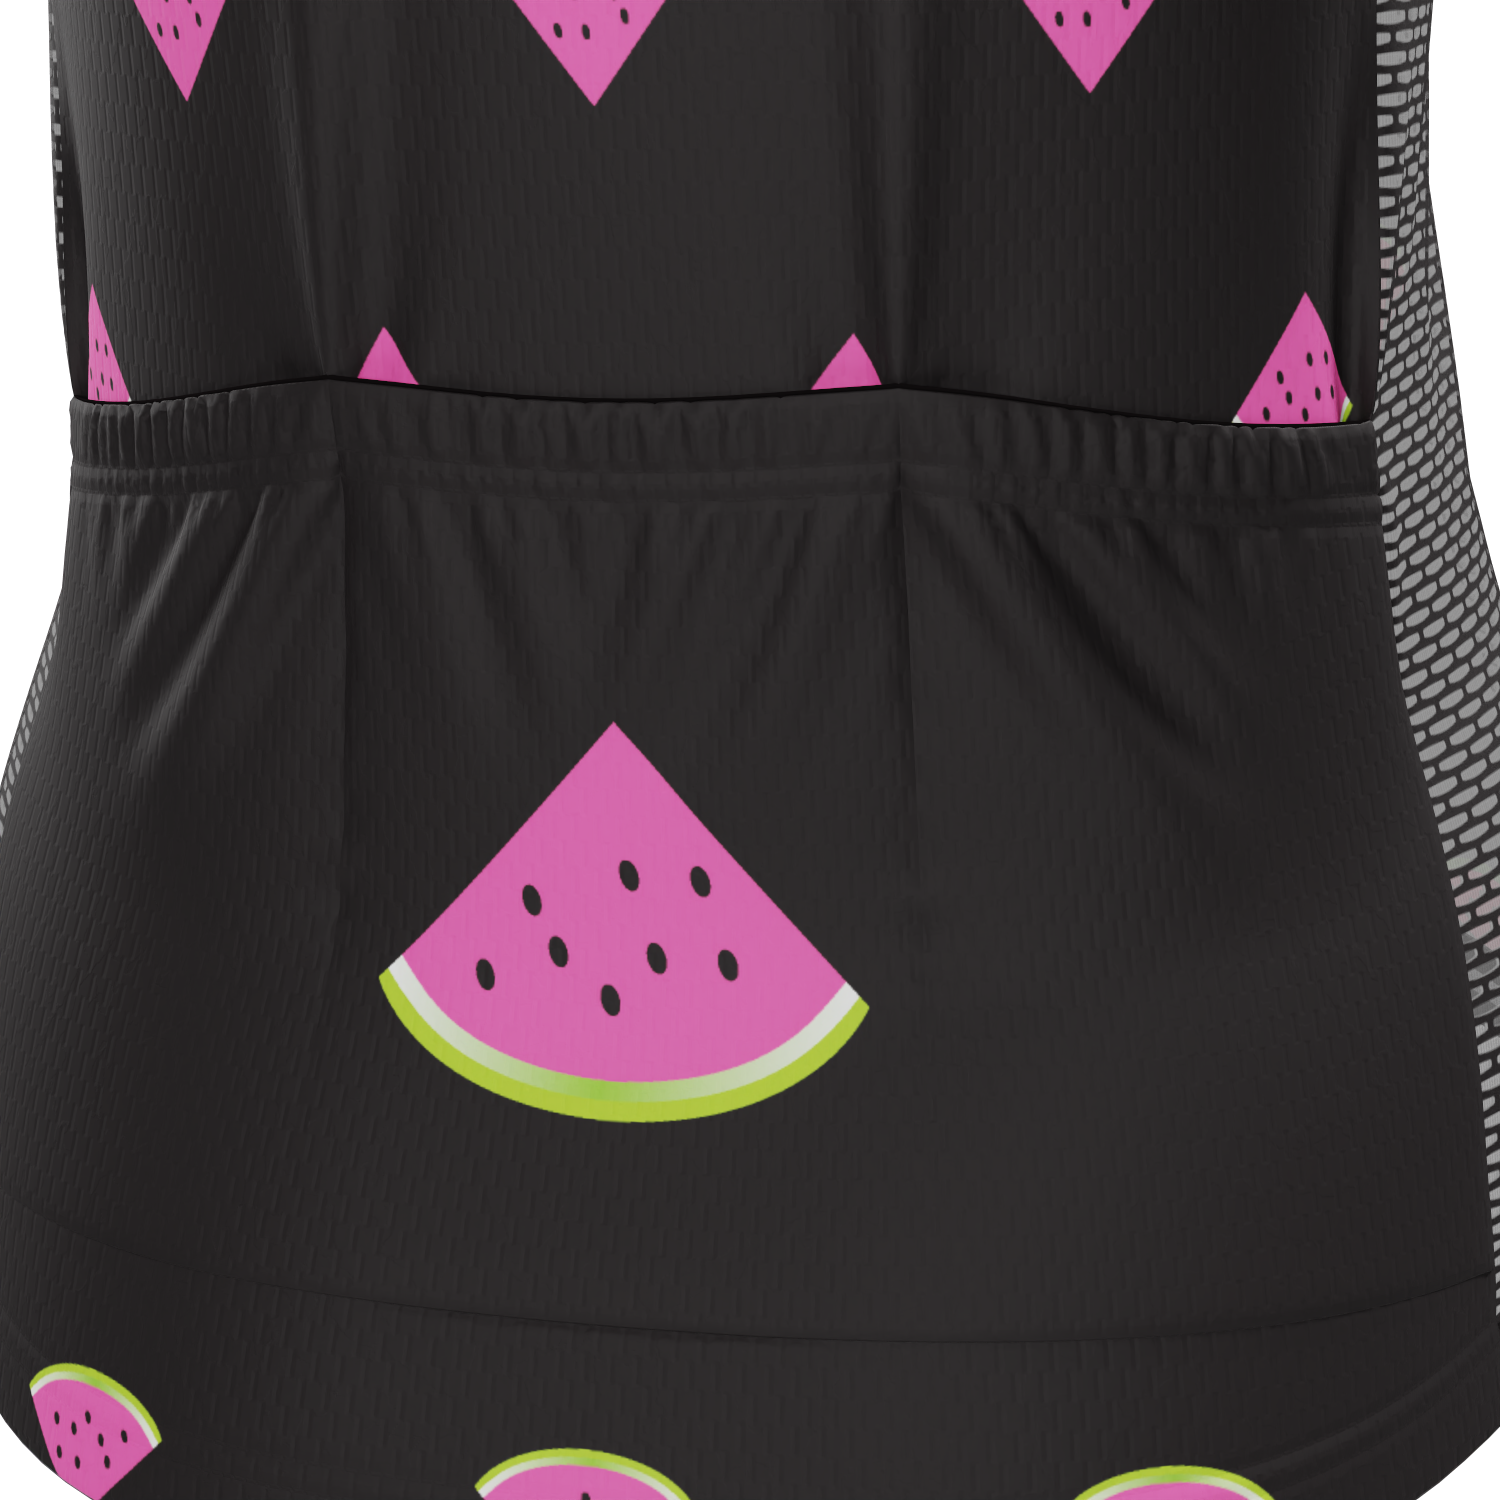 Women's Watermelon Black Short Sleeve Cycling Jersey